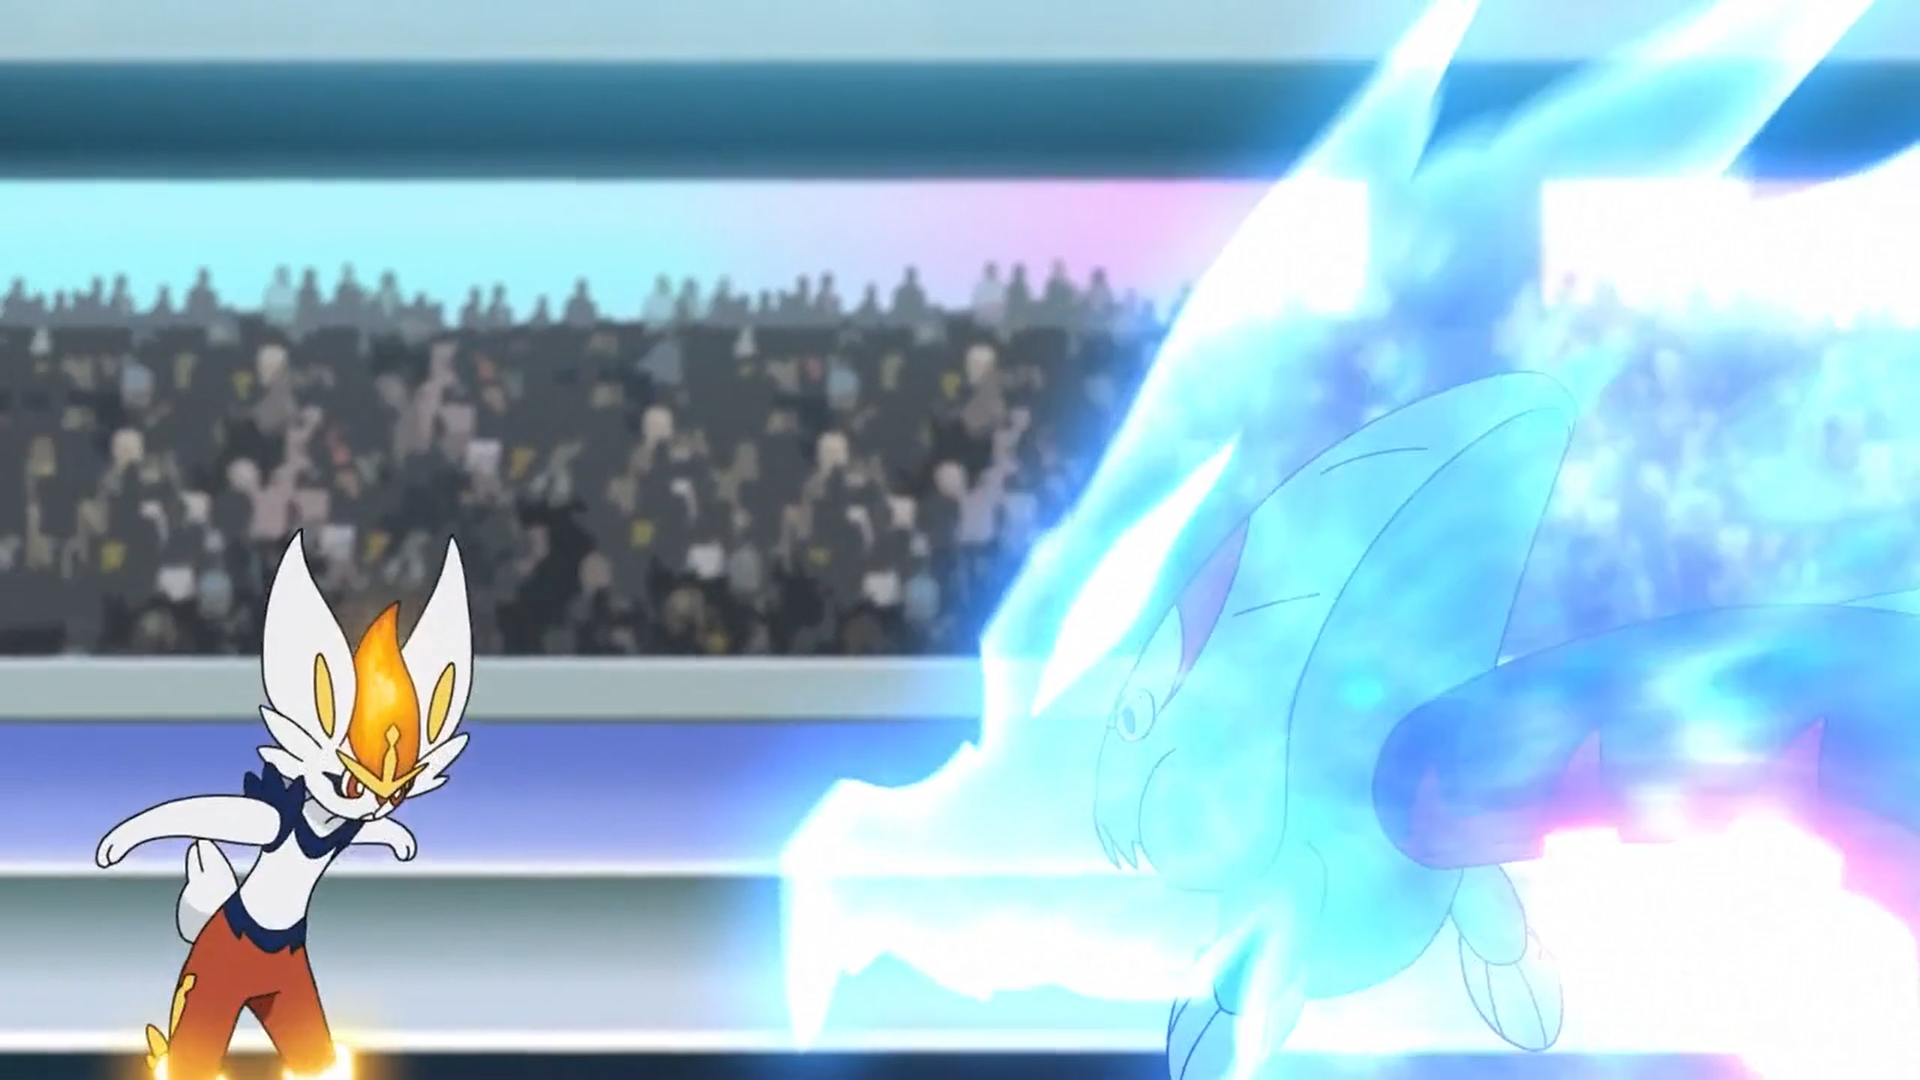 Pokémon (Ash vs Leon - Copa da Coroação Mundial - Final - Pikachu vs C